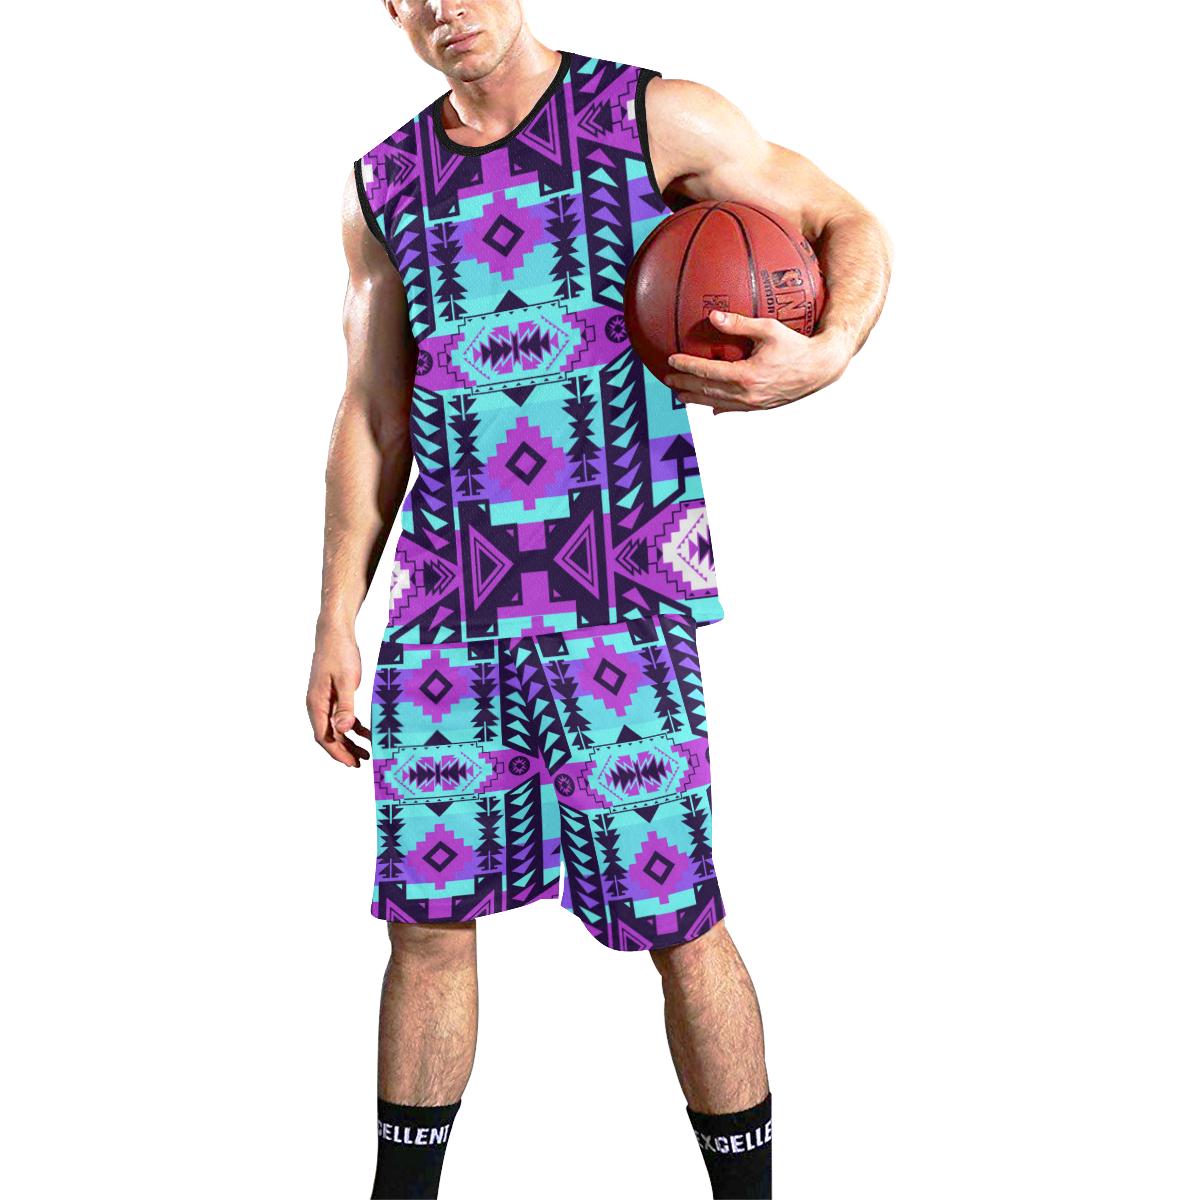 Chiefs Mountain Moon Shadow All Over Print Basketball Uniform Basketball Uniform e-joyer 